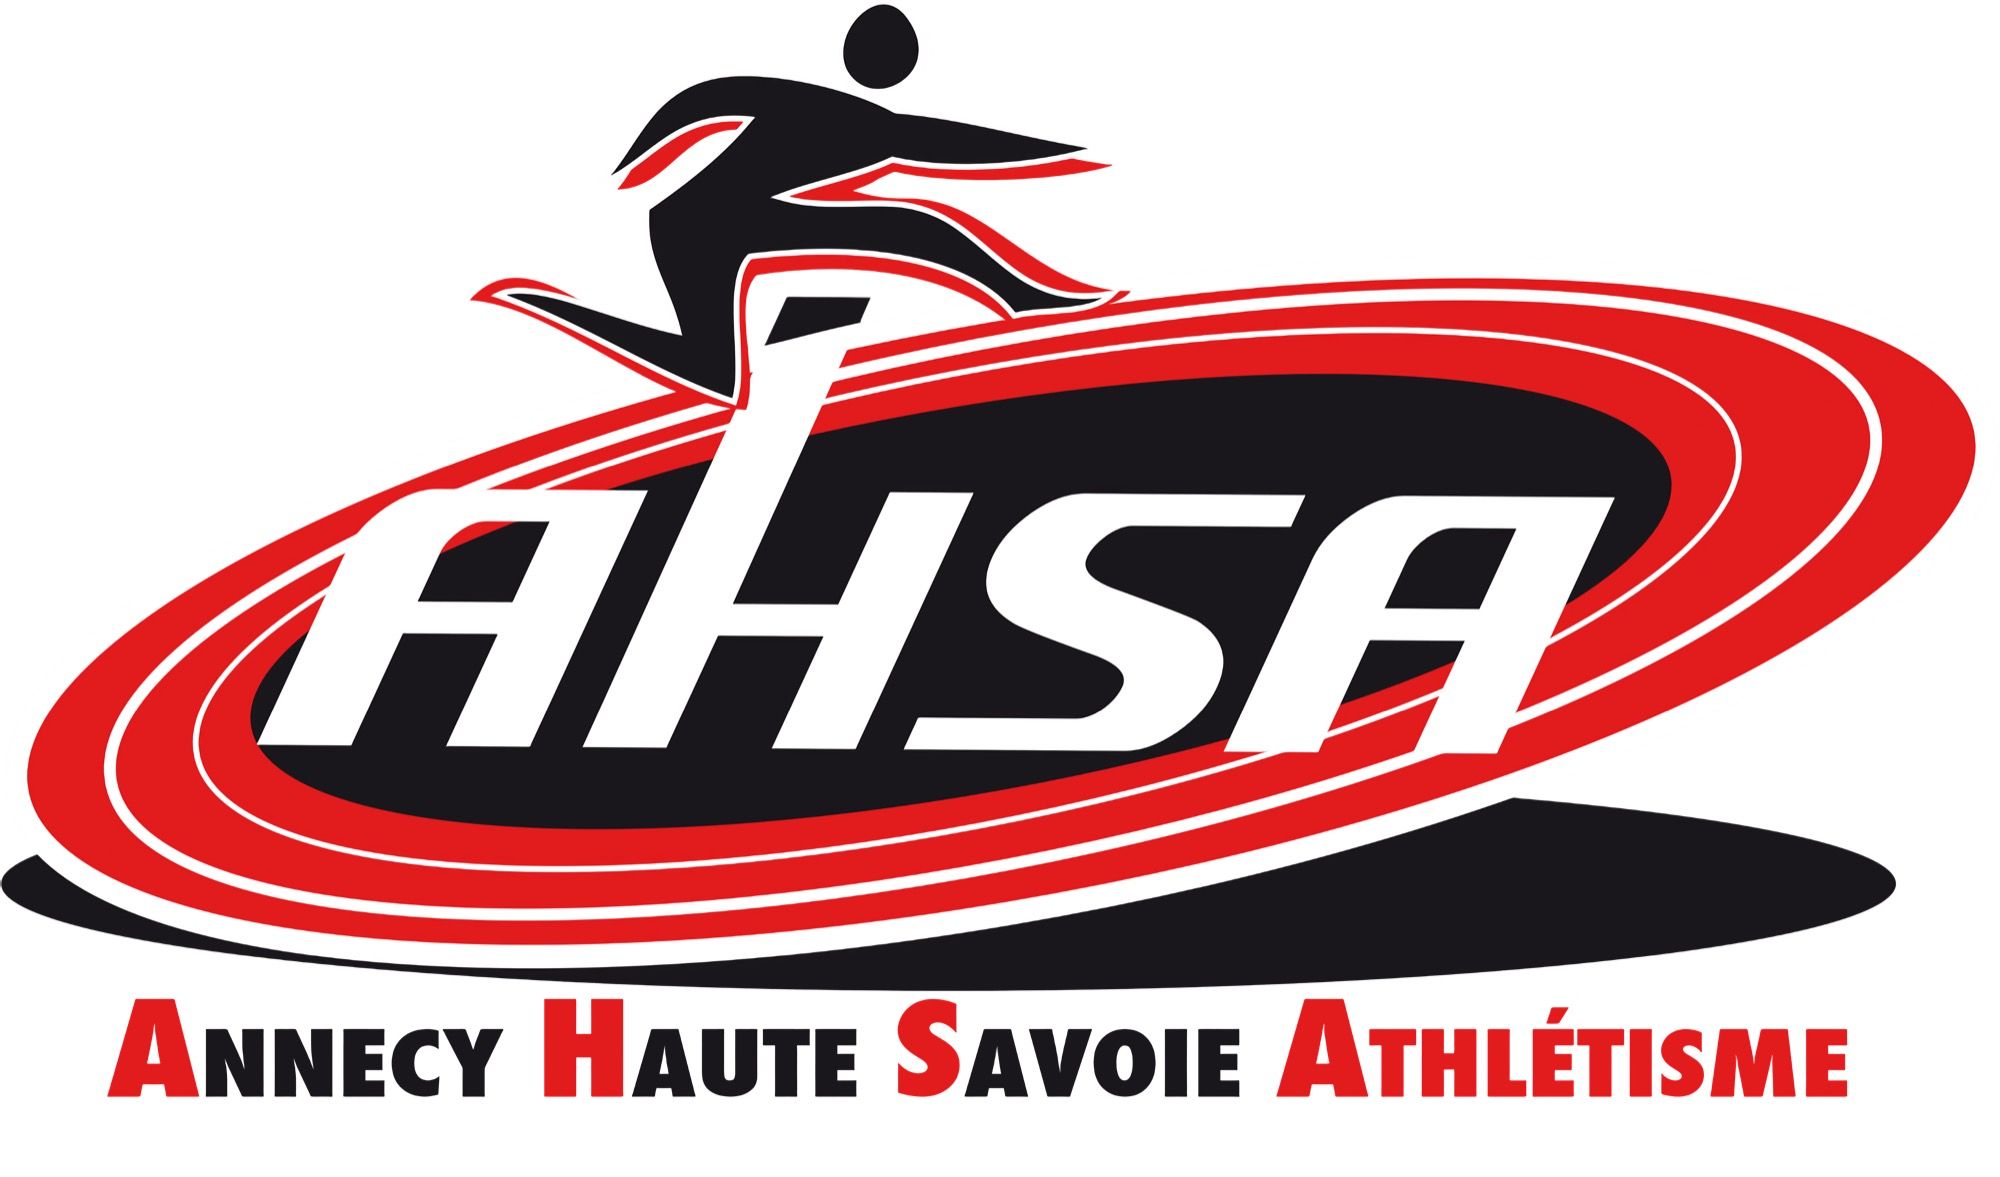 Annecy Haute Savoie Athlétisme